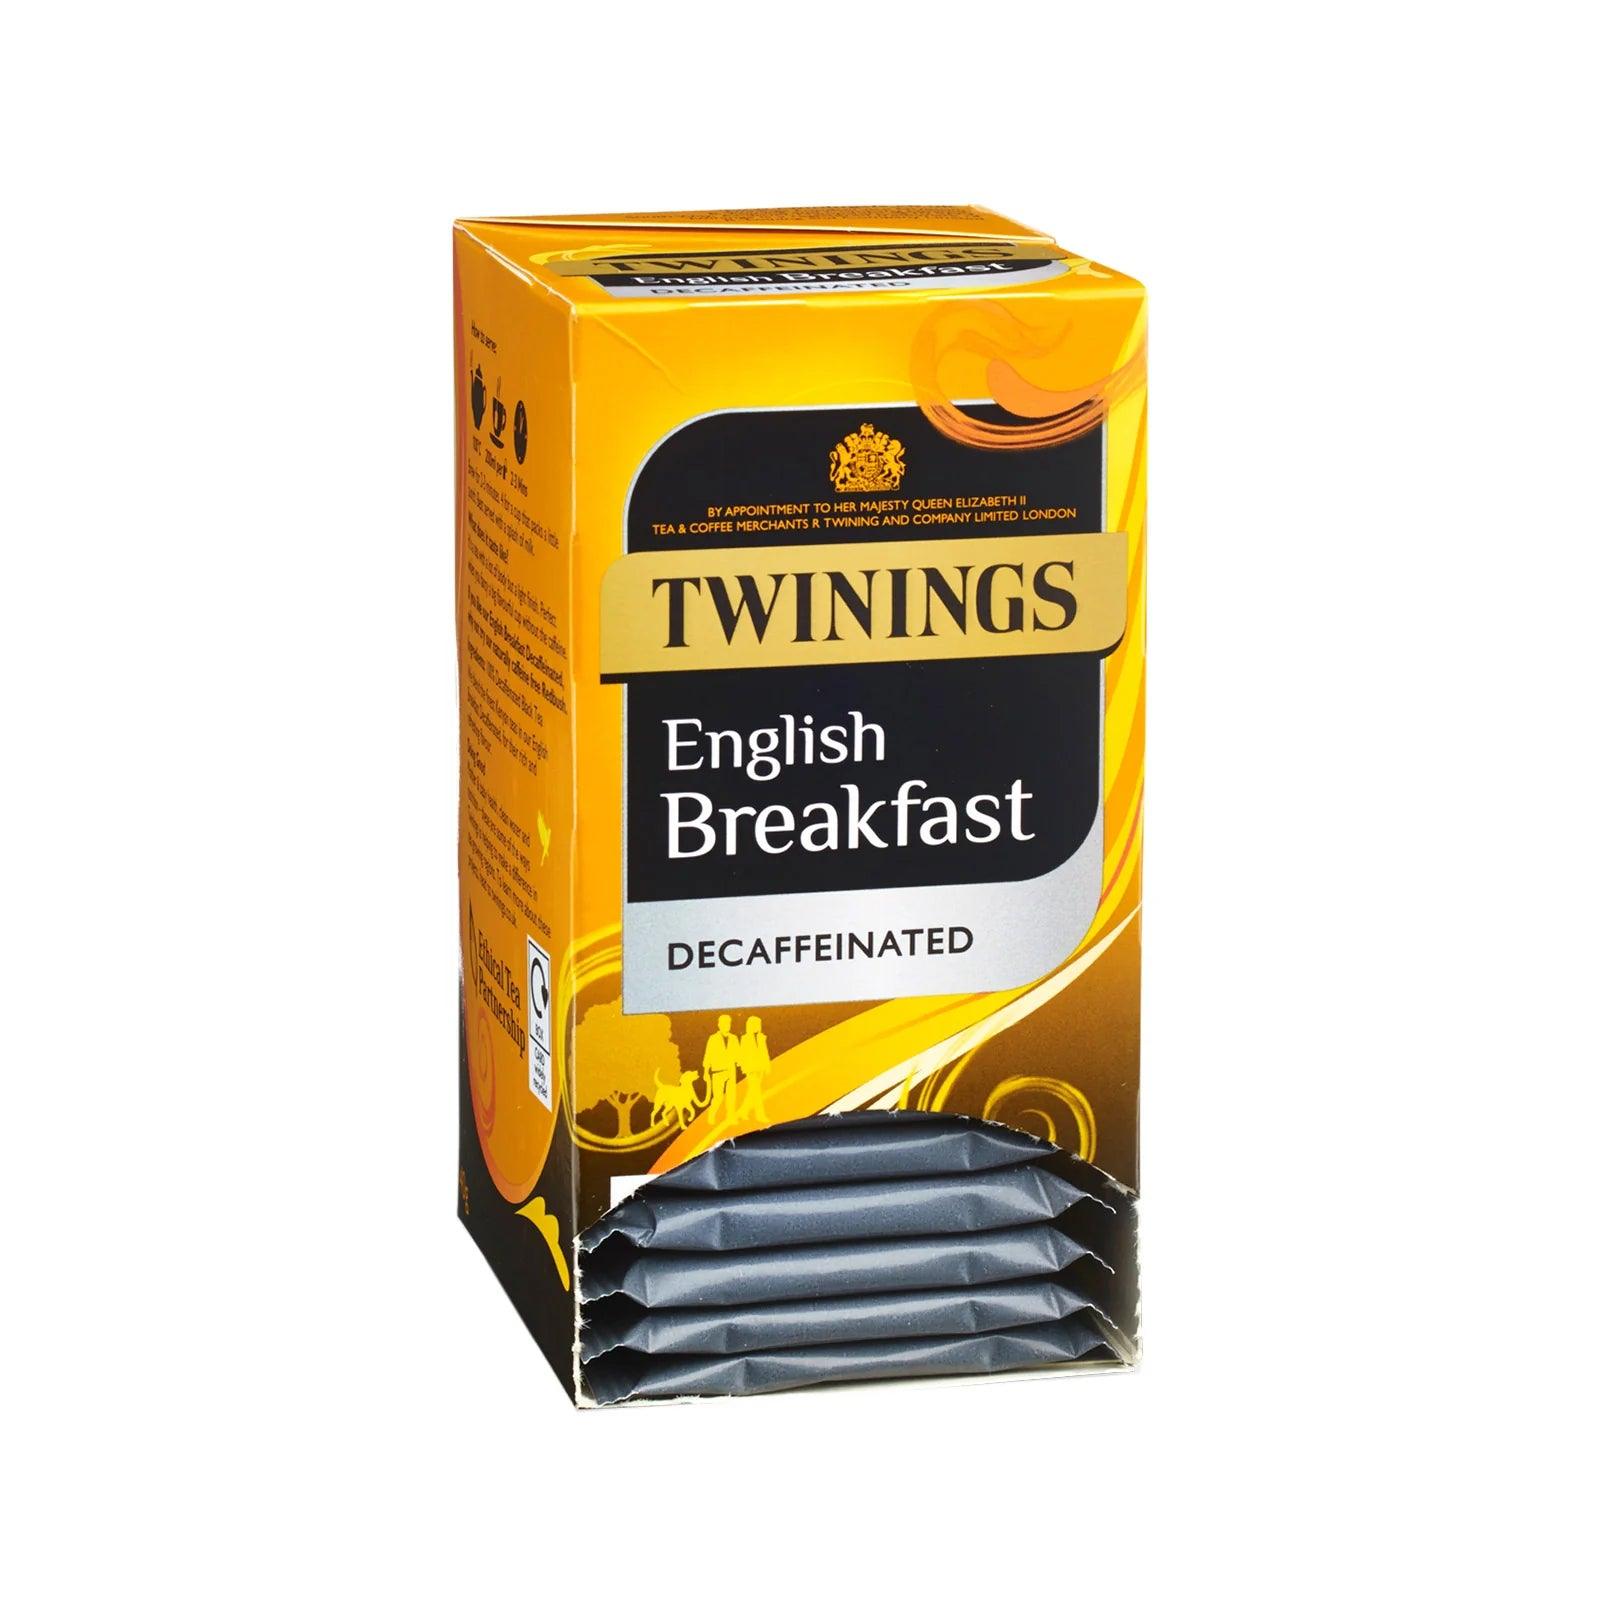 Twinings English Breakfast Decaffeinated Envelope Tea Bags - 20 Bags - Vending Superstore